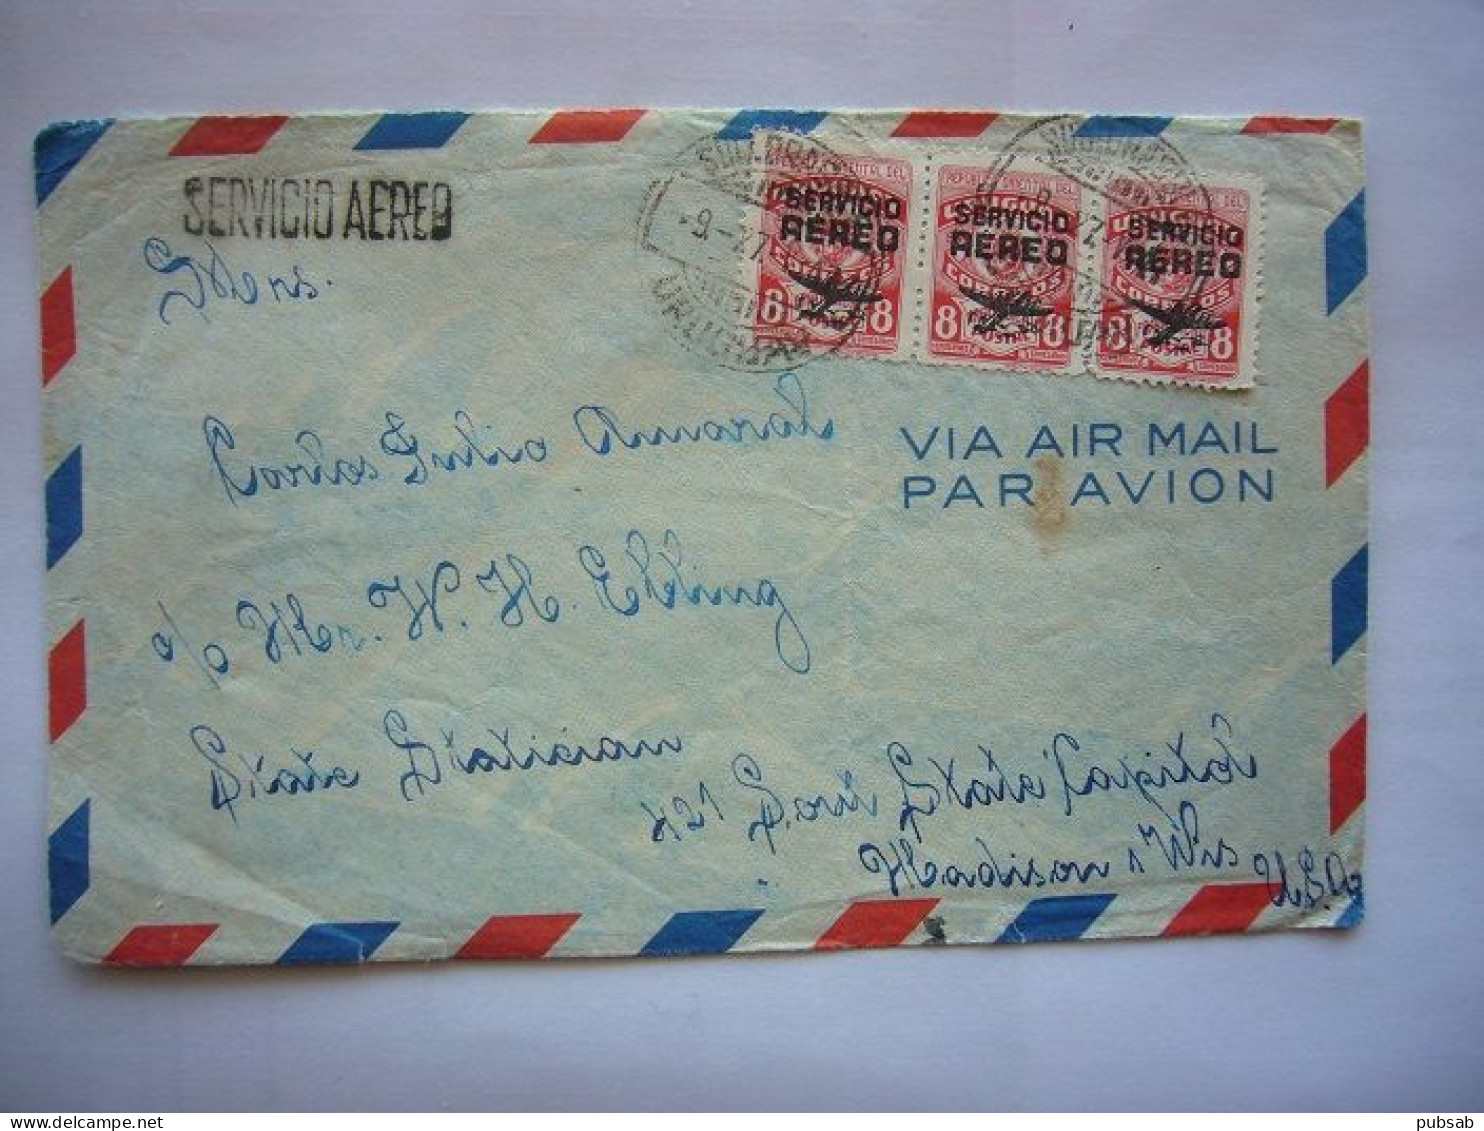 Avion / Airplane / Flight From Uruguay To Madison, Wisconsin / May 27, 1947 At 9h - Uruguay